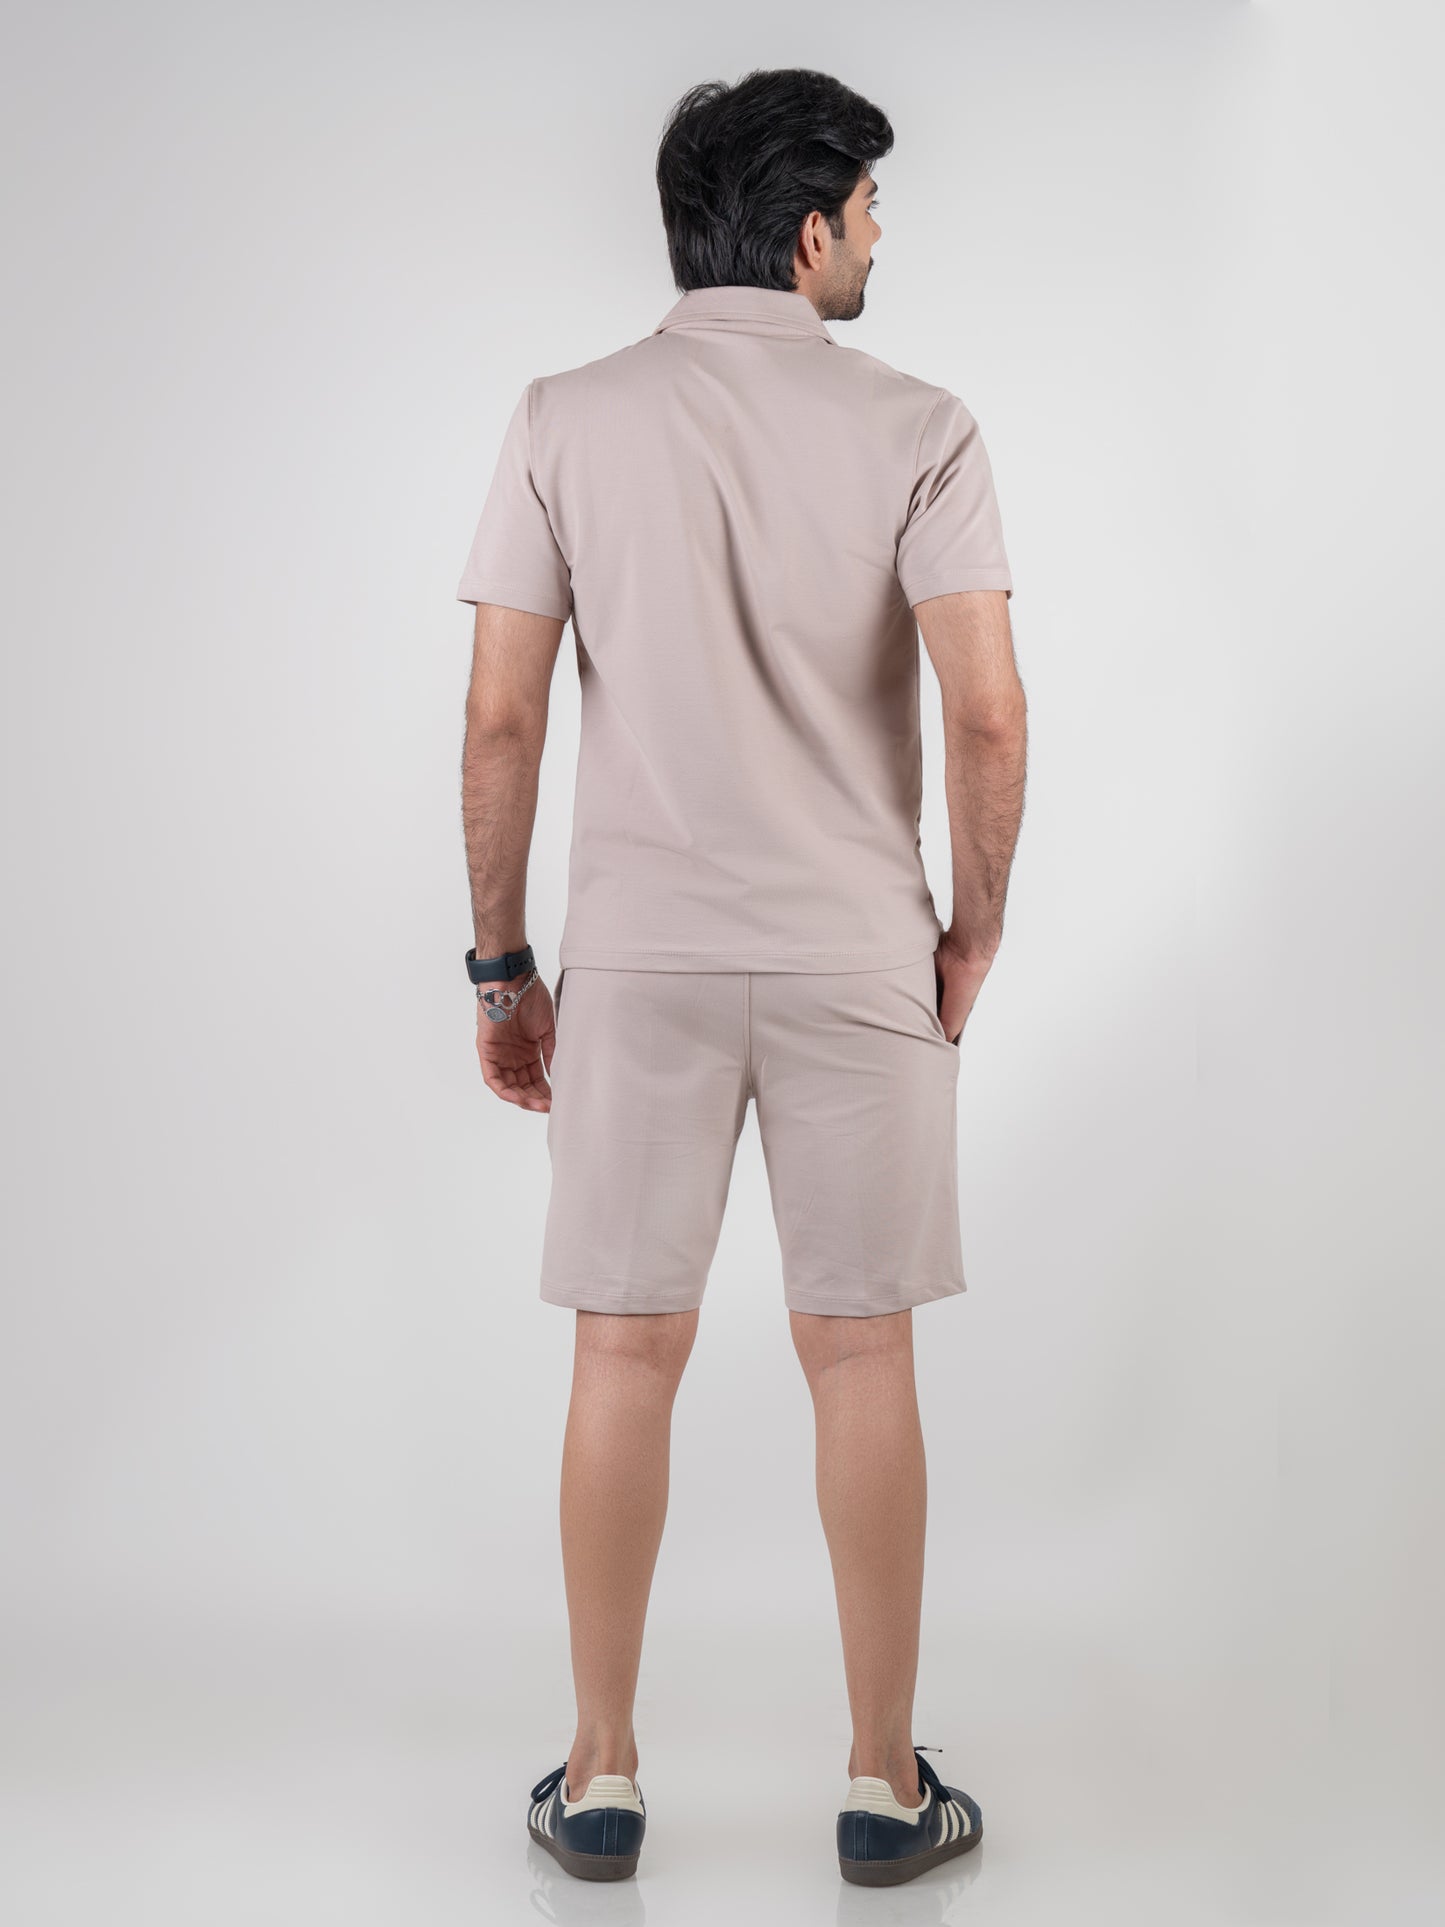 Martini Shirt & Shorts Co-Ords For Men